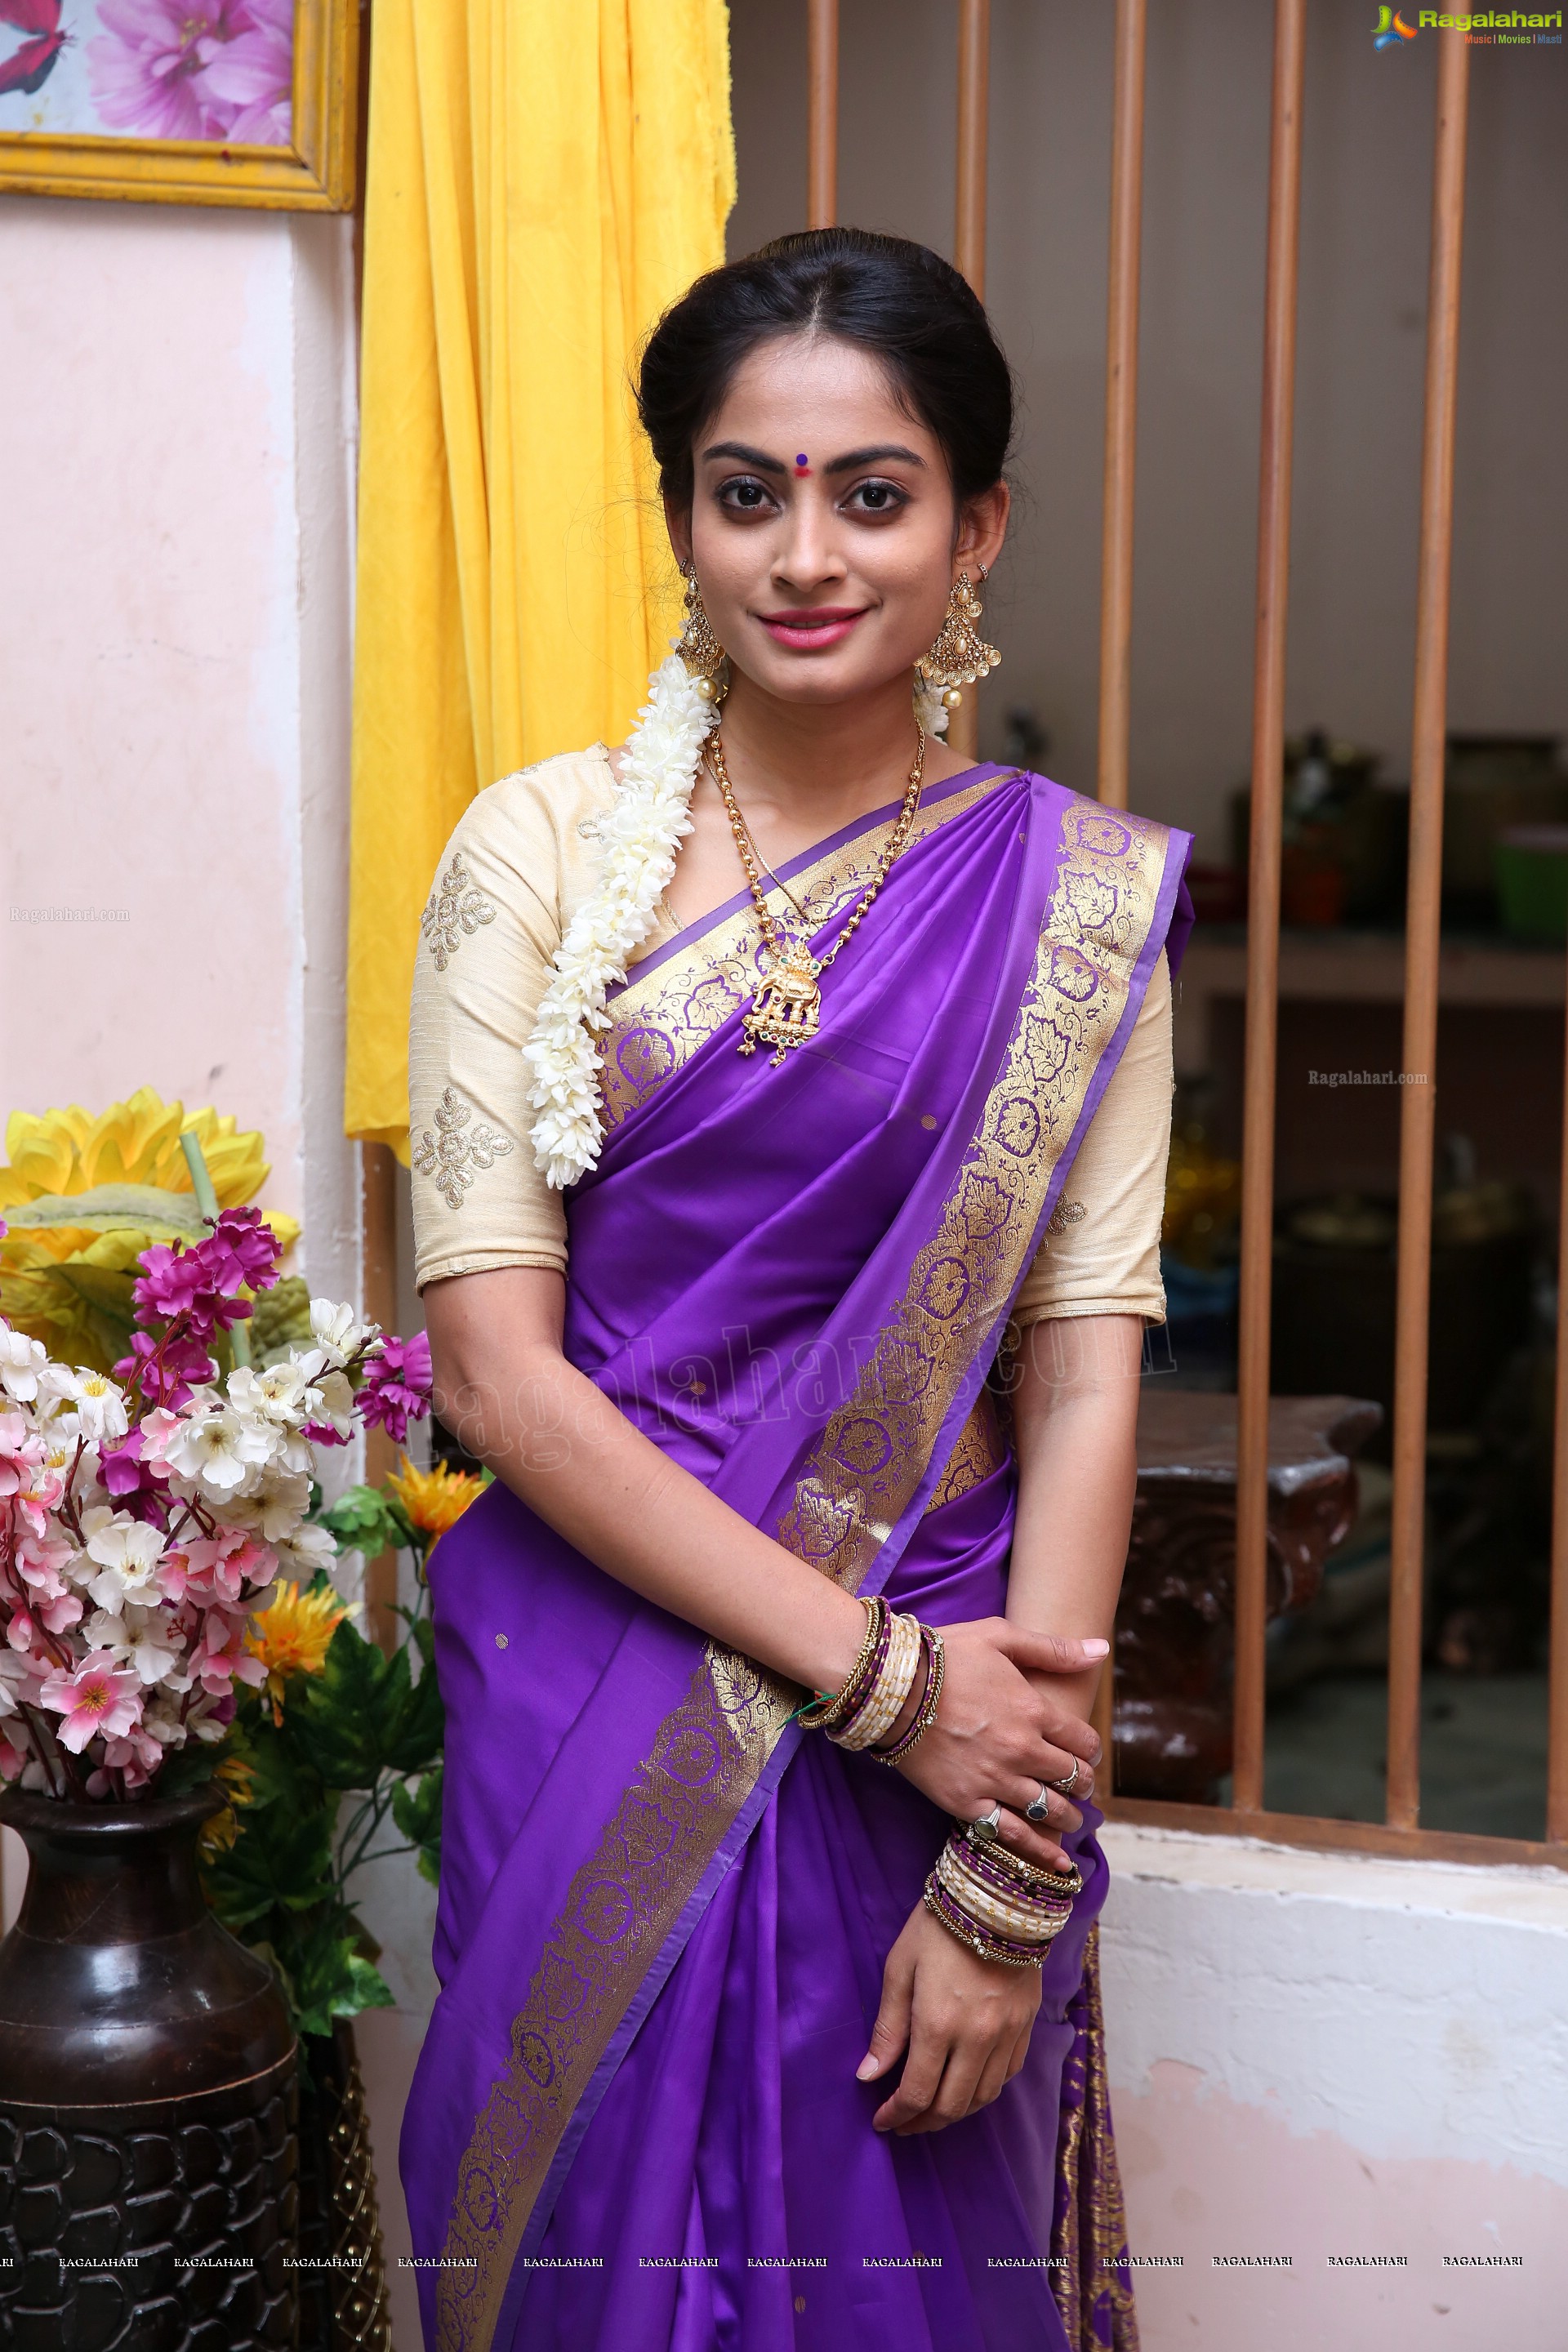 Sri Priya From the Sets of Agnisakshi Telugu Serial